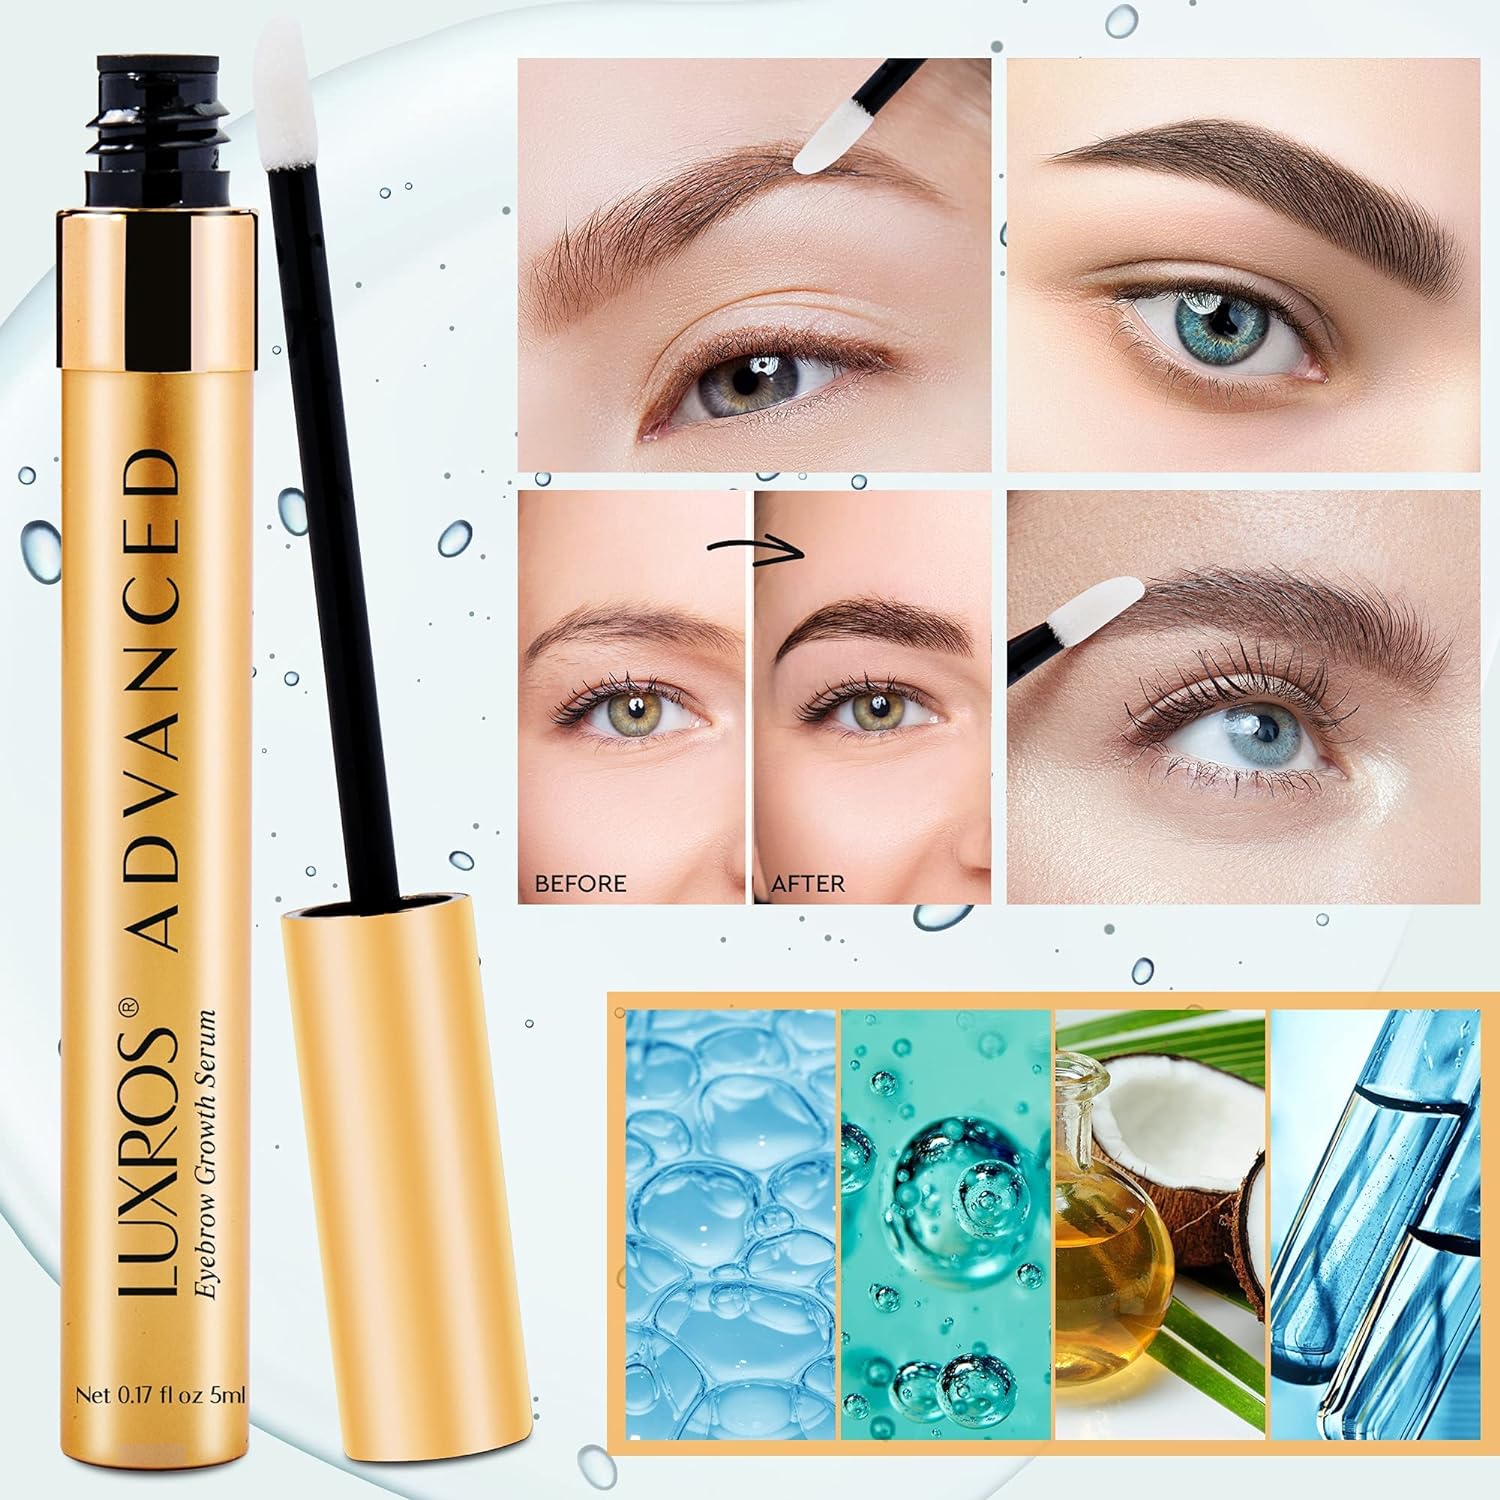 5 best eyebrow enhancing serums